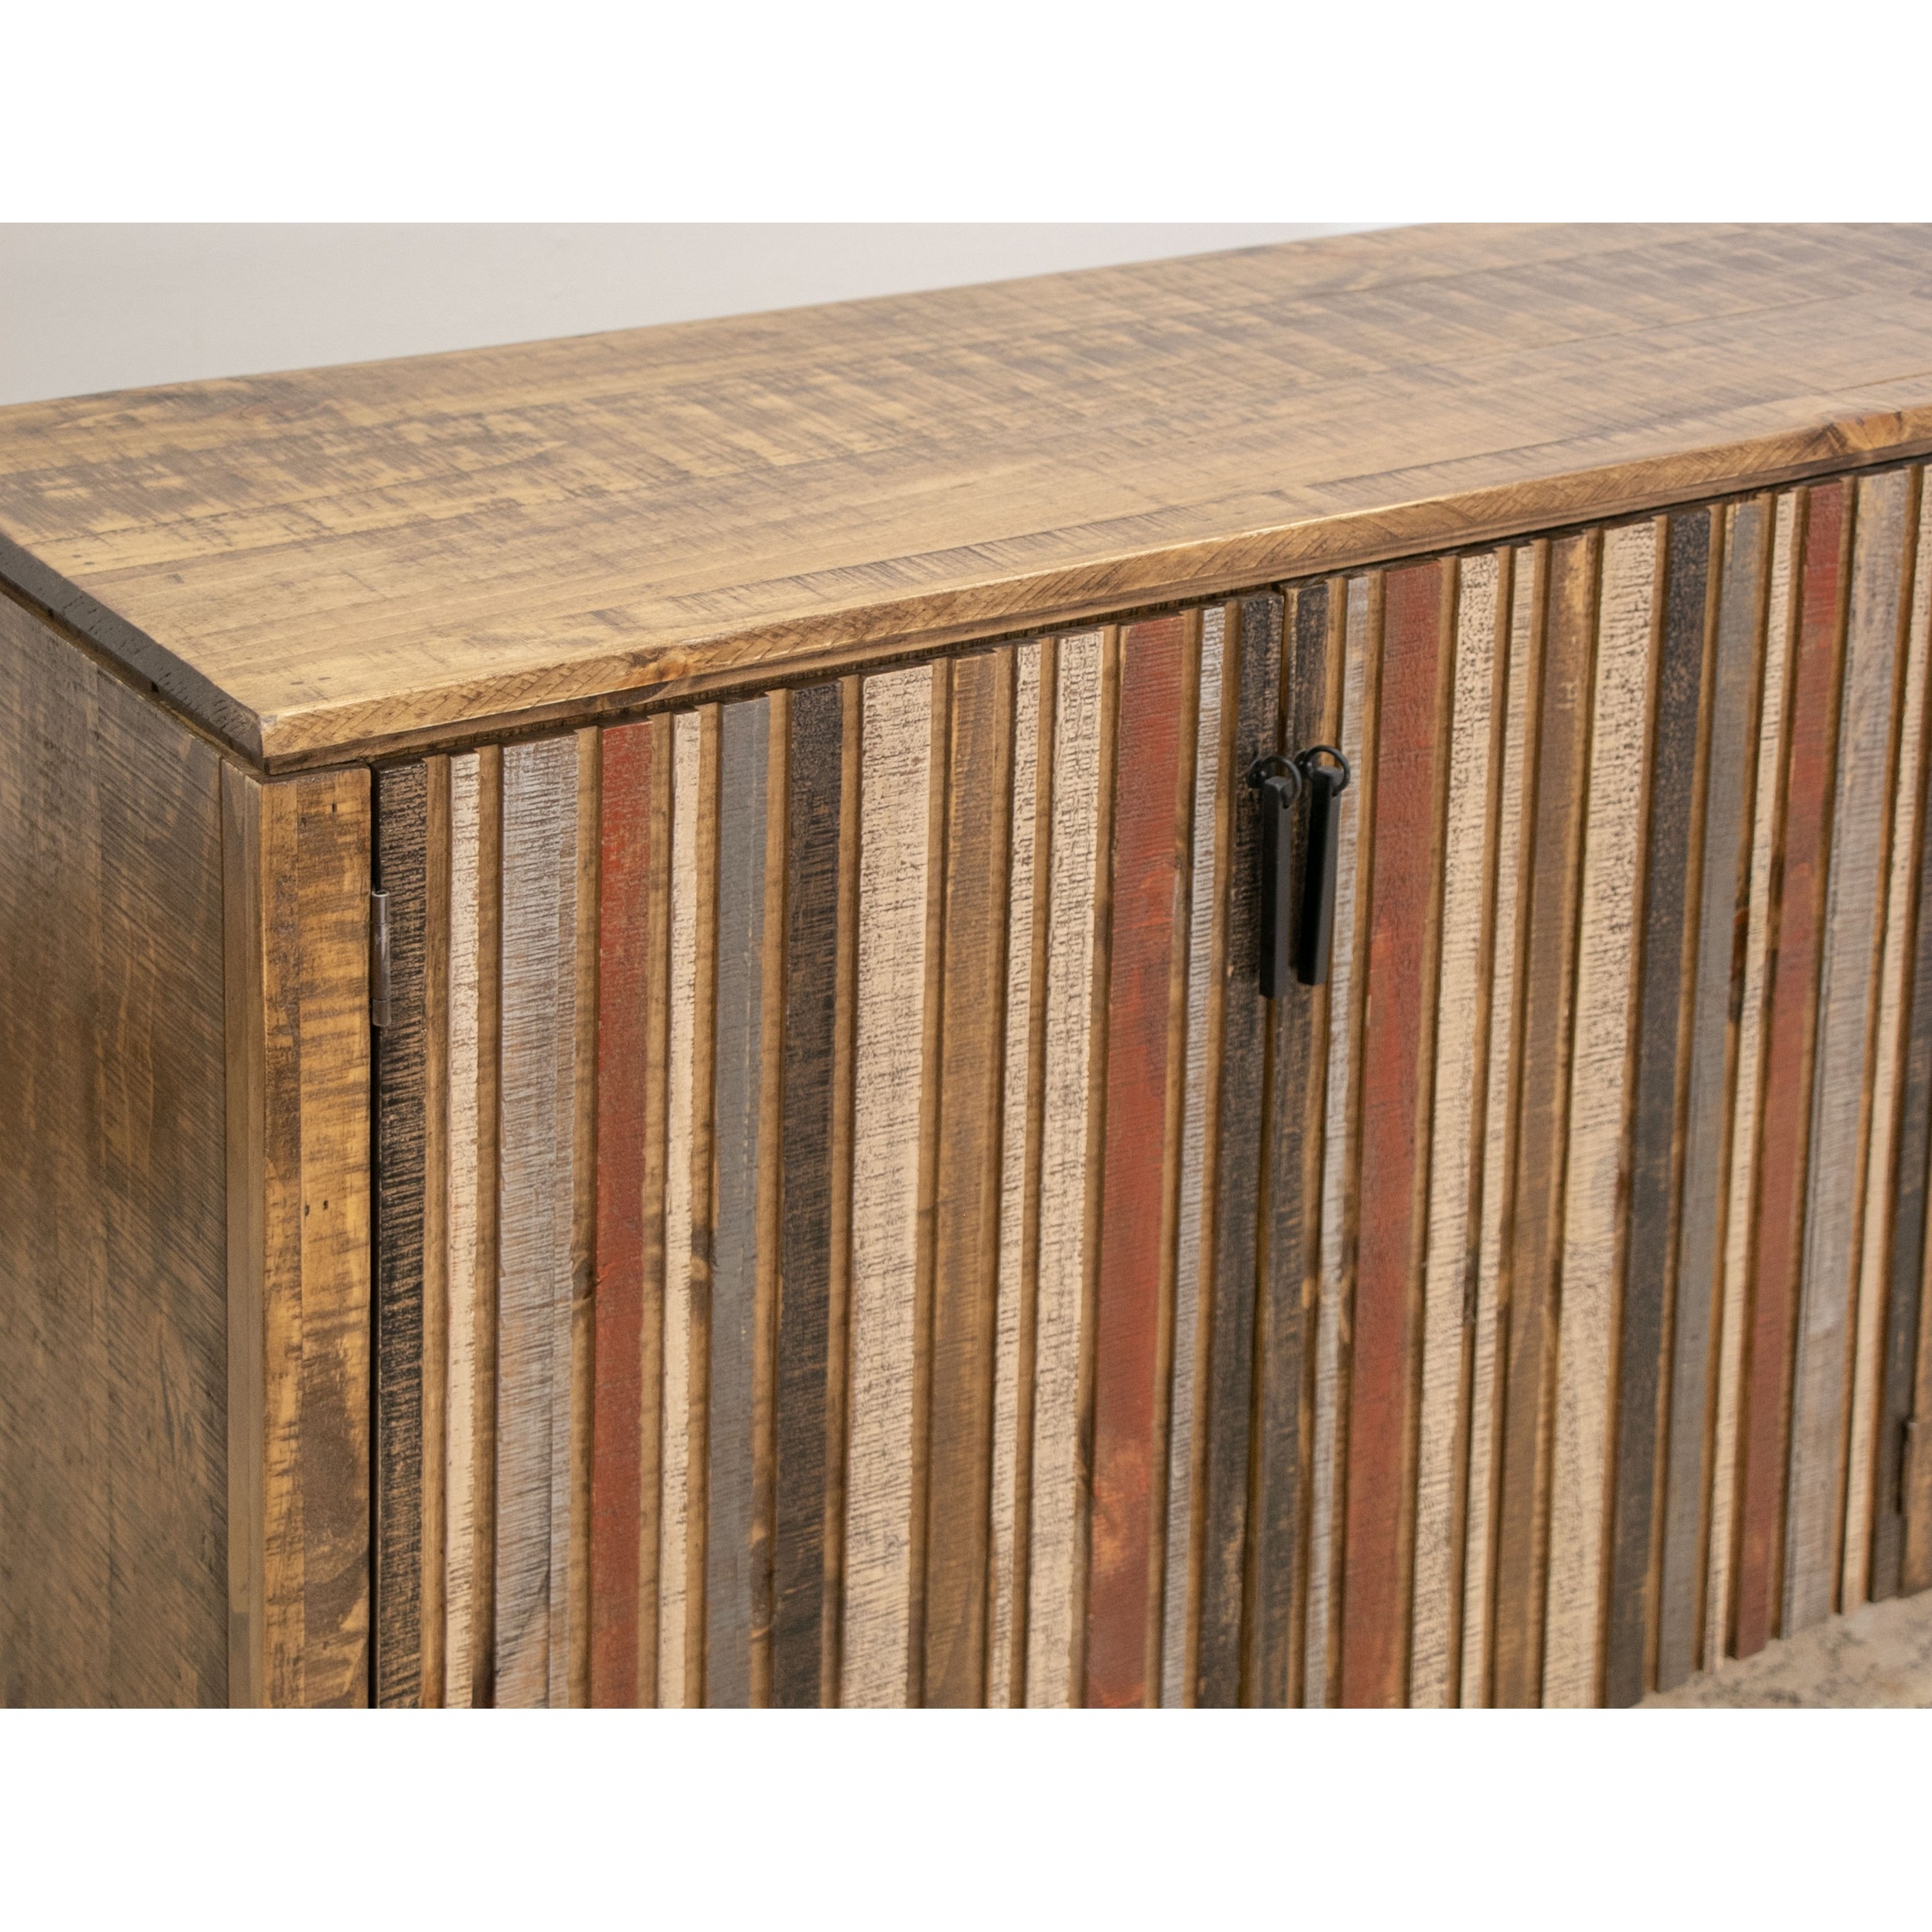 Texu 69 Inch Sideboard Console, Pine Wood, Pedant Handles, Brown, Red - Saltoro Sherpi